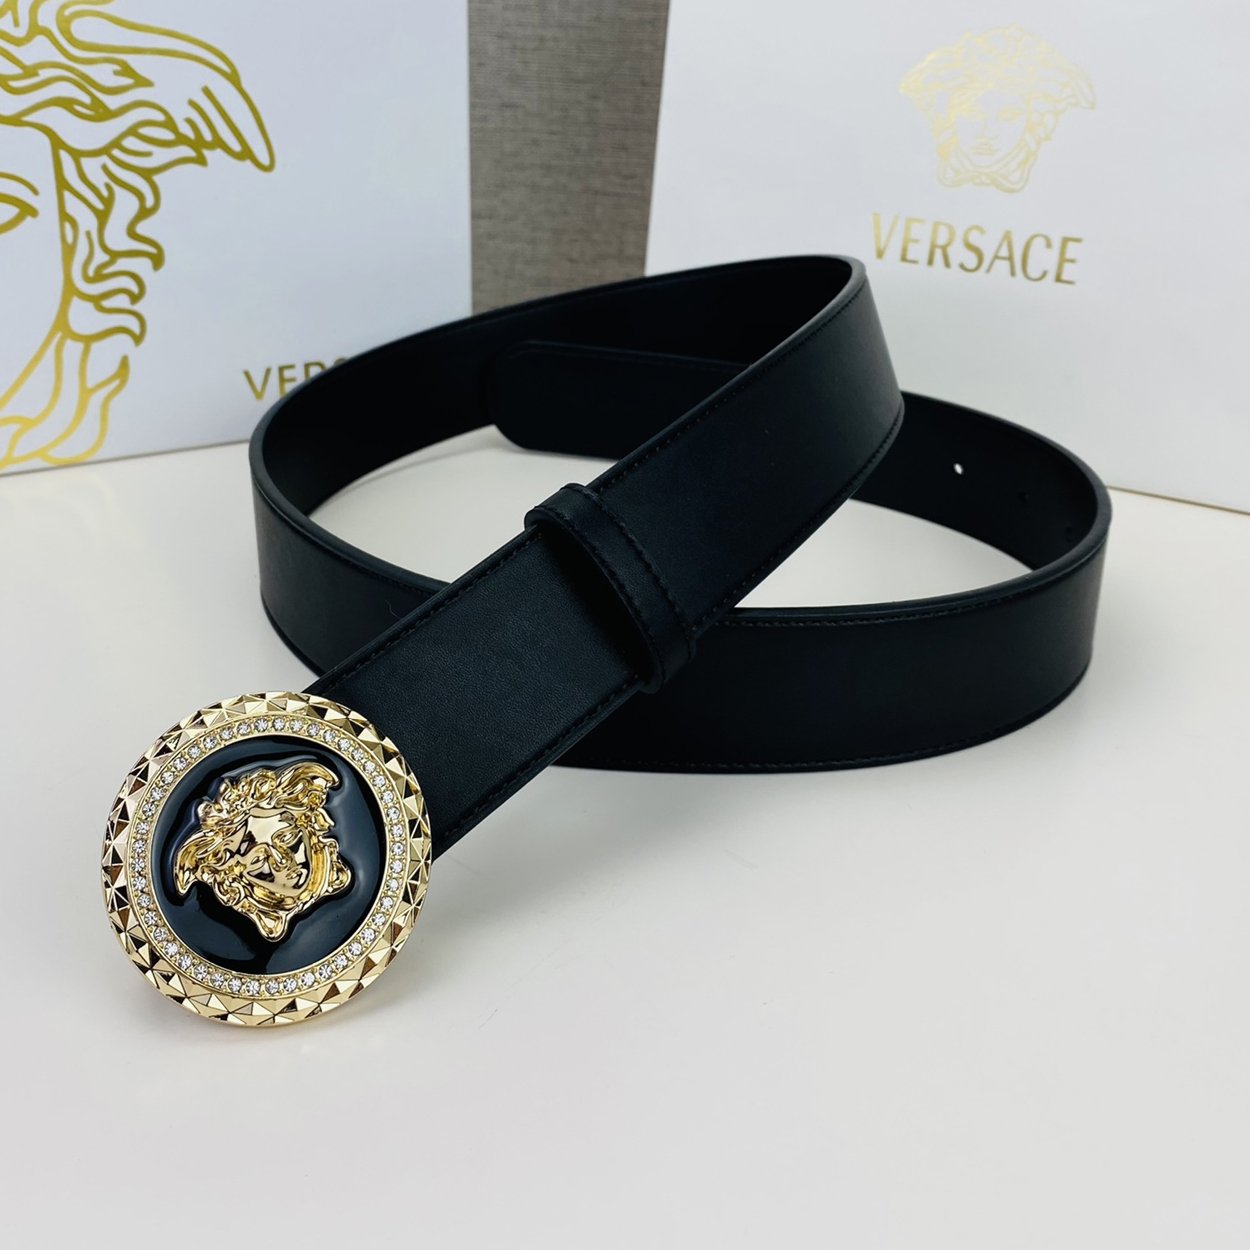 Versace men's diamond buckle Medusa casual solid color belt